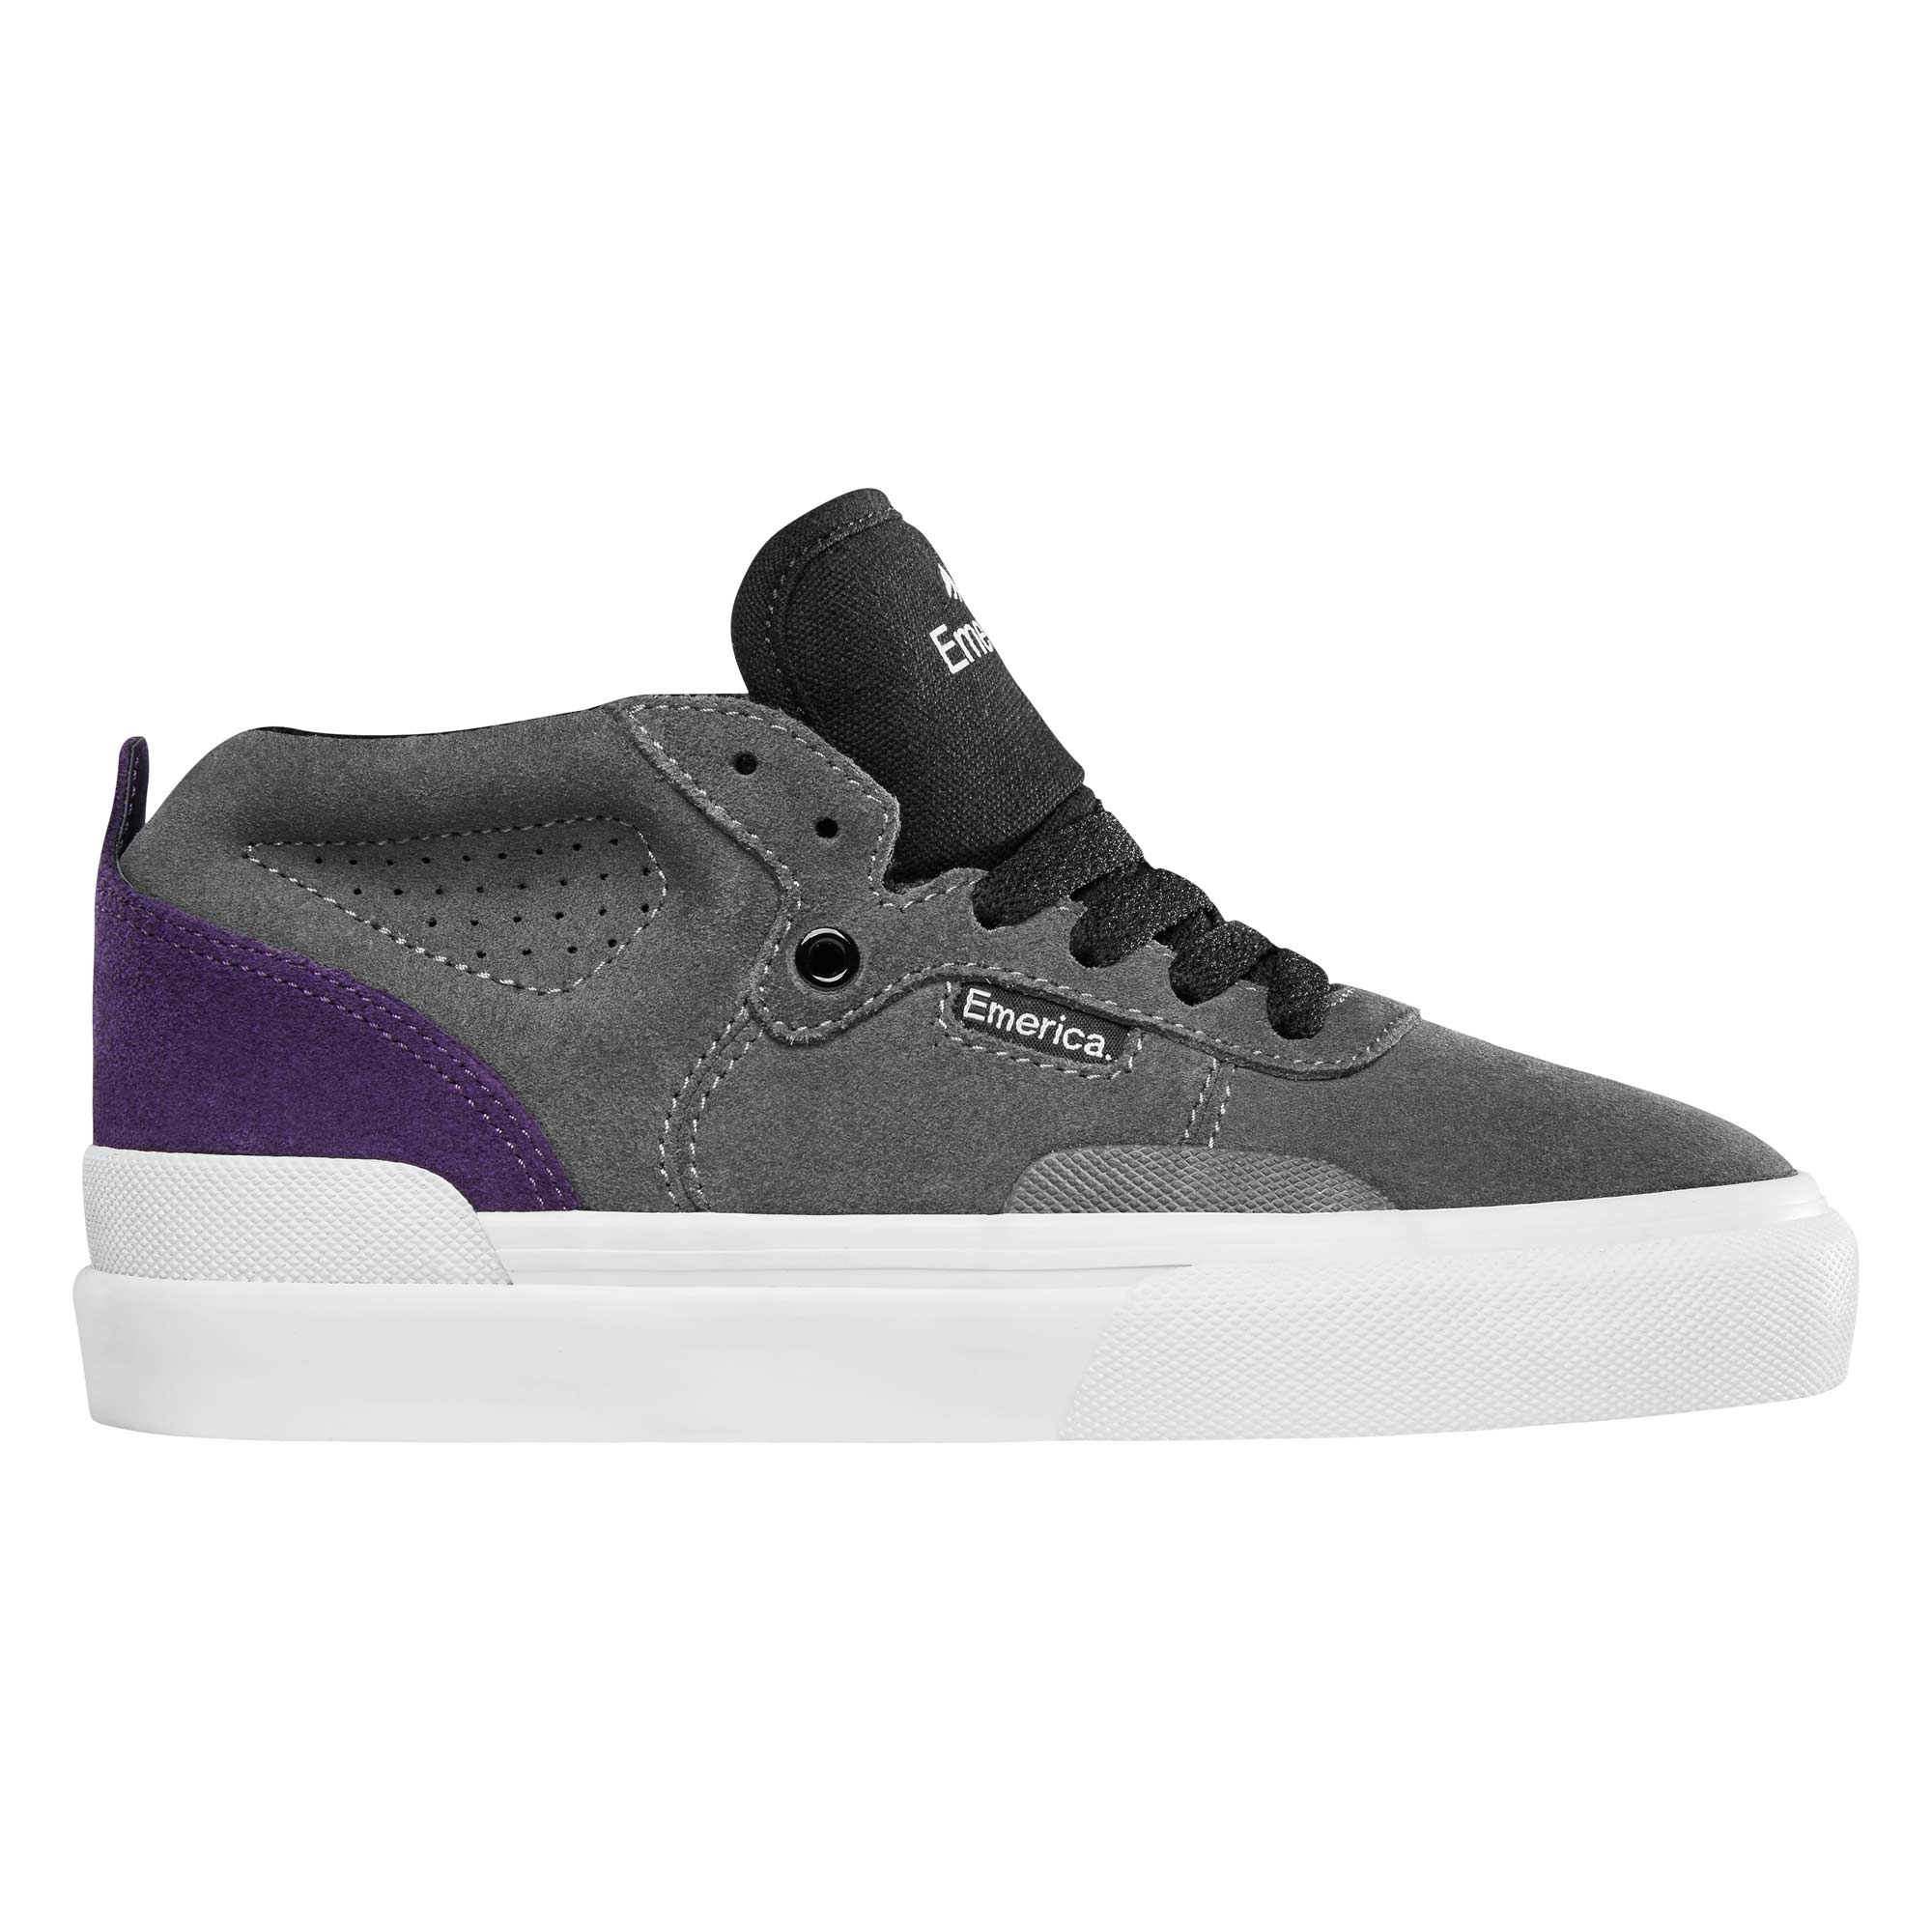 EMERICA Youths Shoe PILLAR gry/pur grey/purple